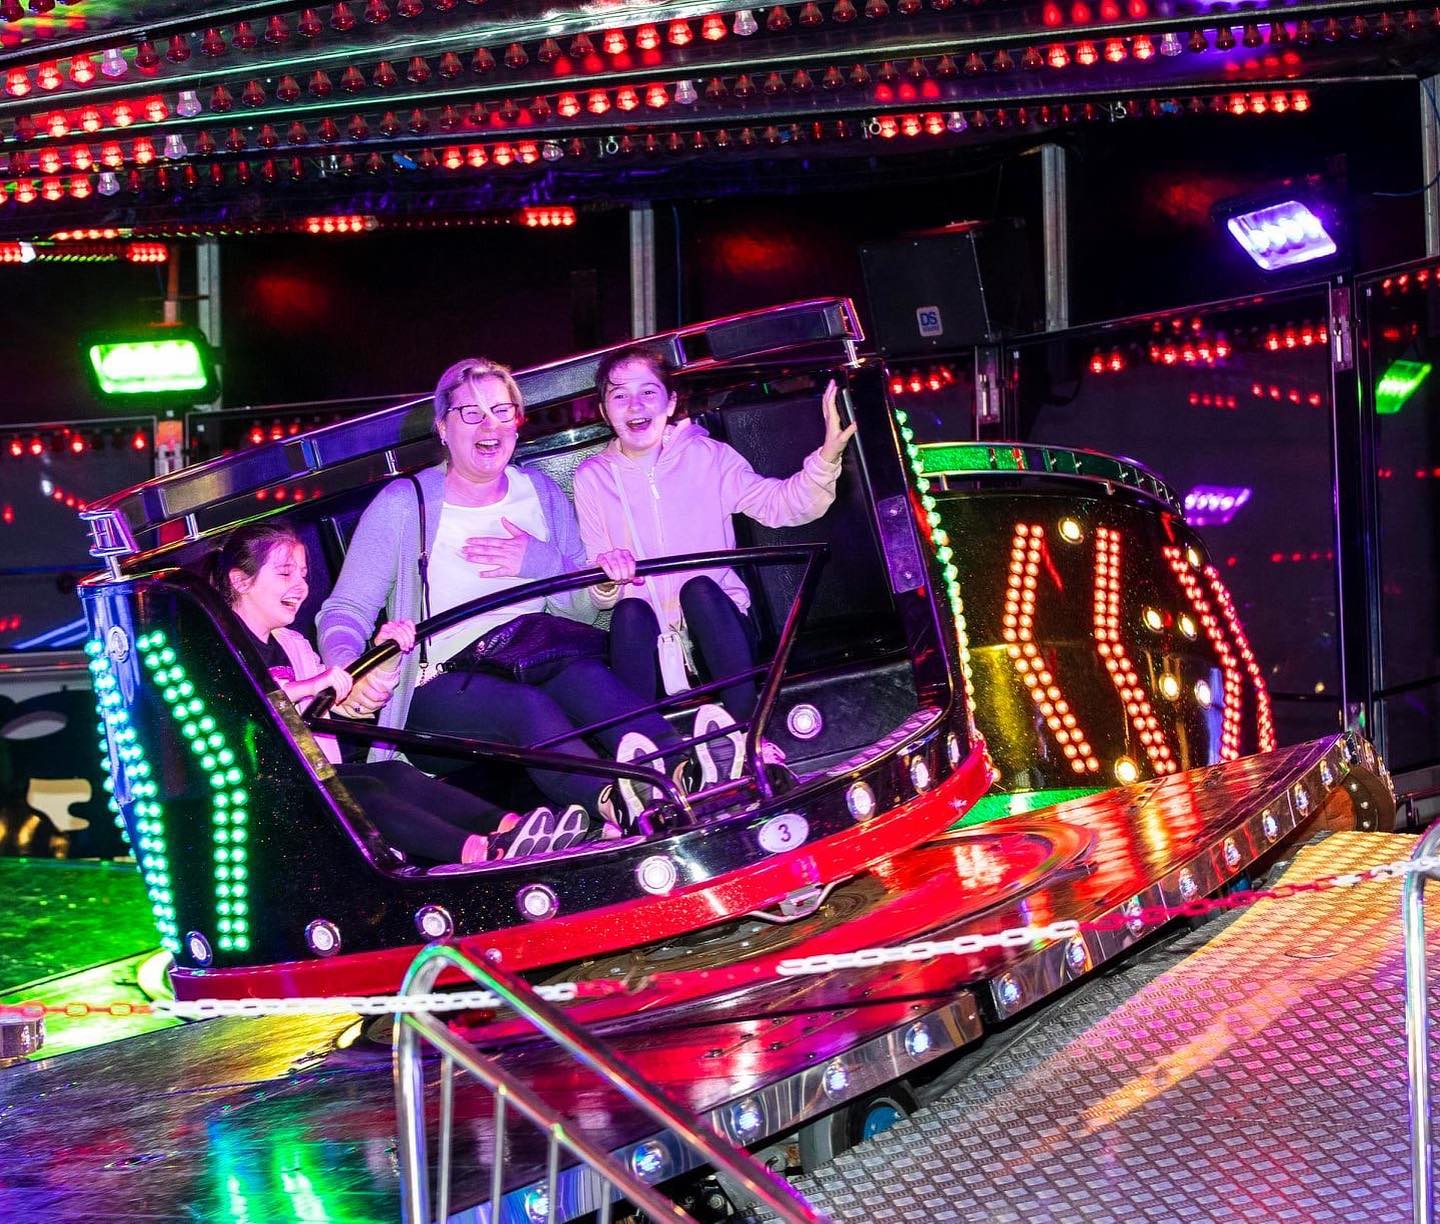 Family enjoying a ride at Harrogate Indoor Funfair